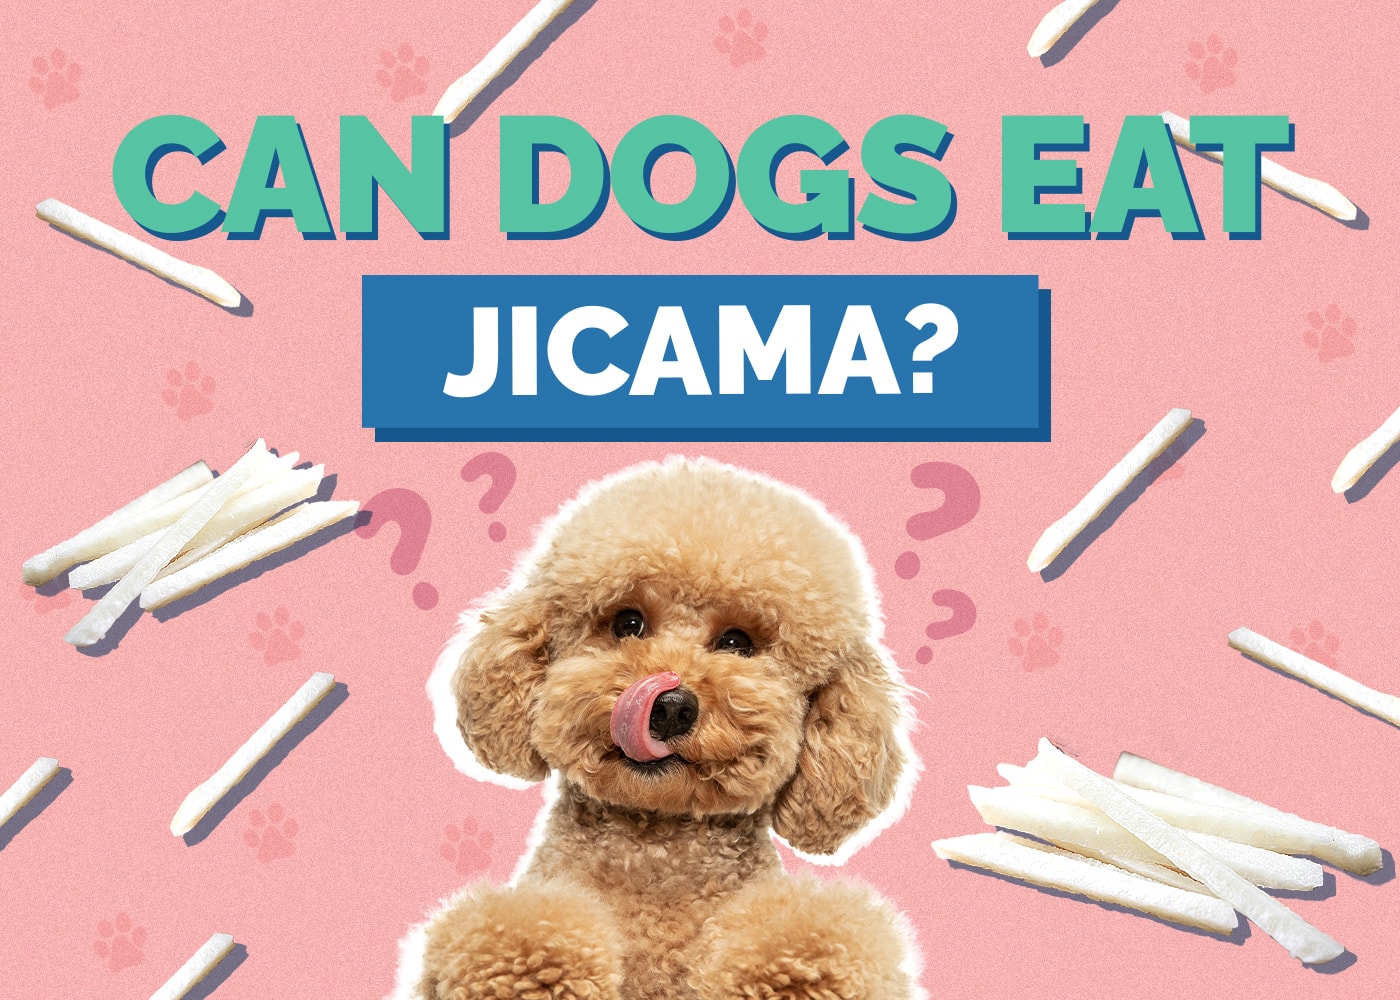 Can Dogs Eat jicama